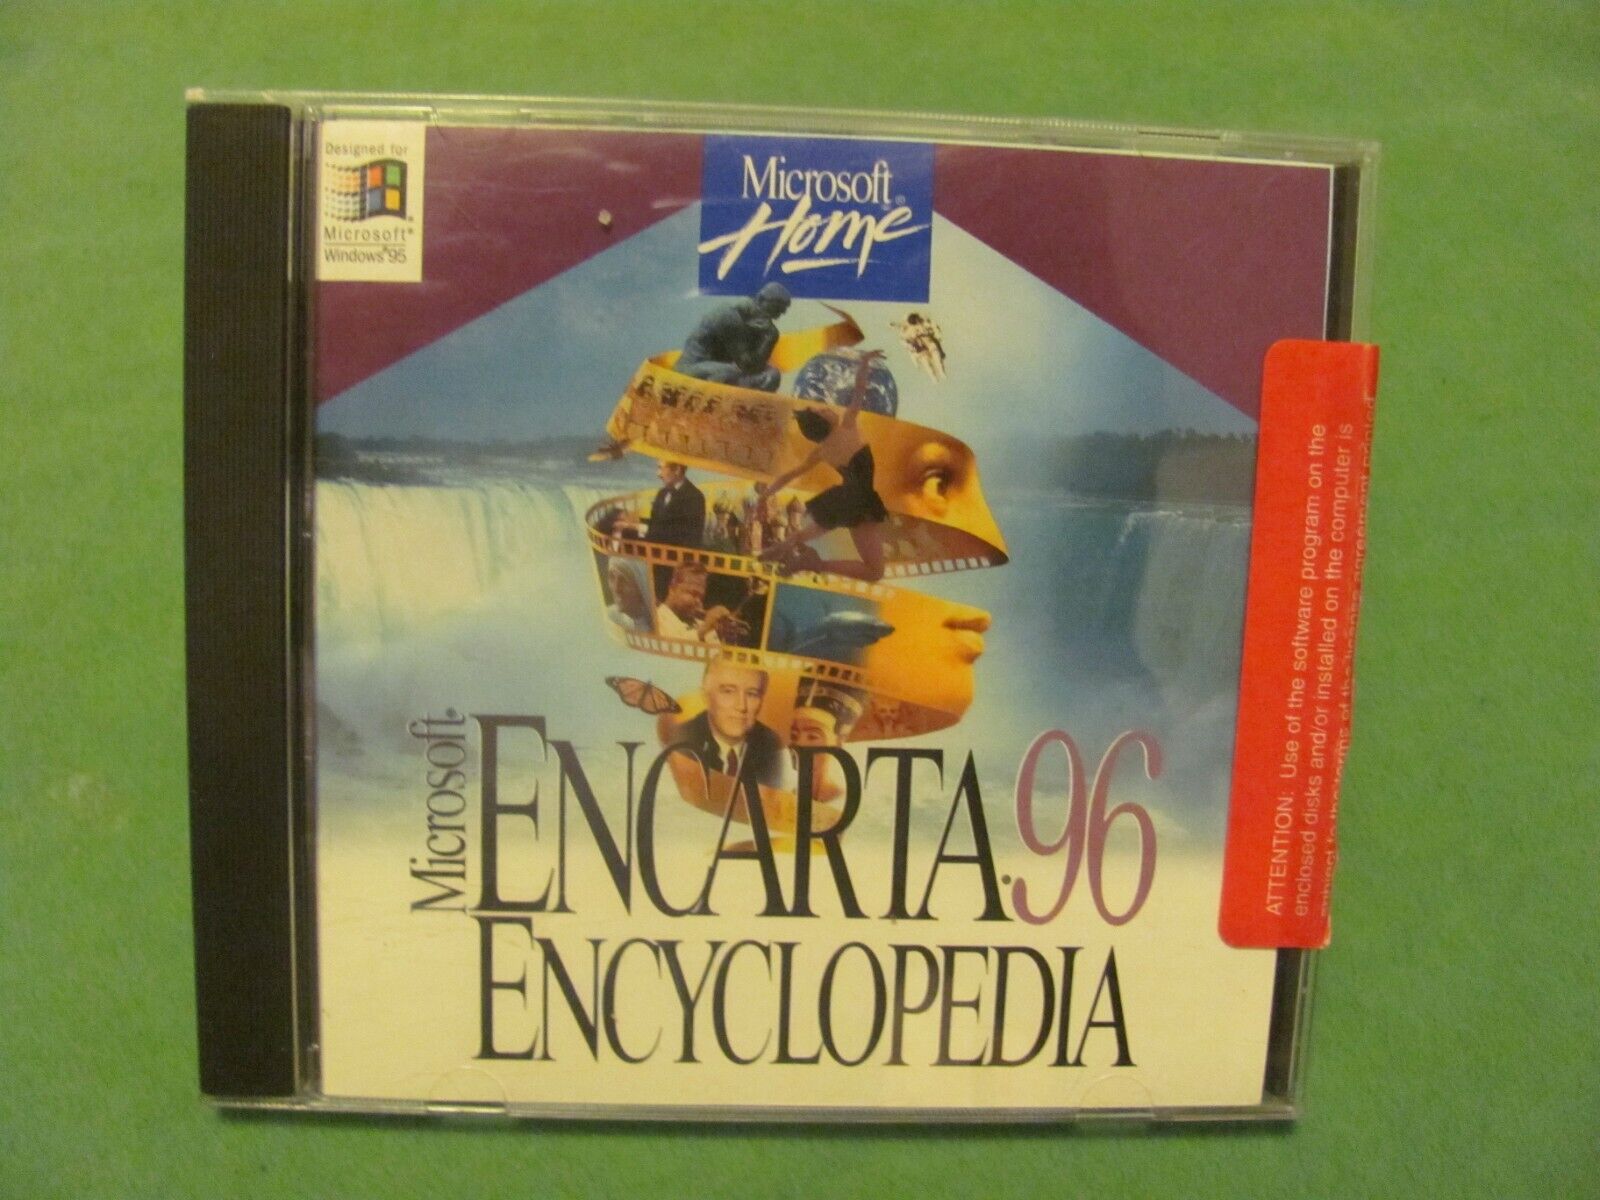 Microsoft Encarta 96 Encyclopedia CD-ROM - 1993-1995.